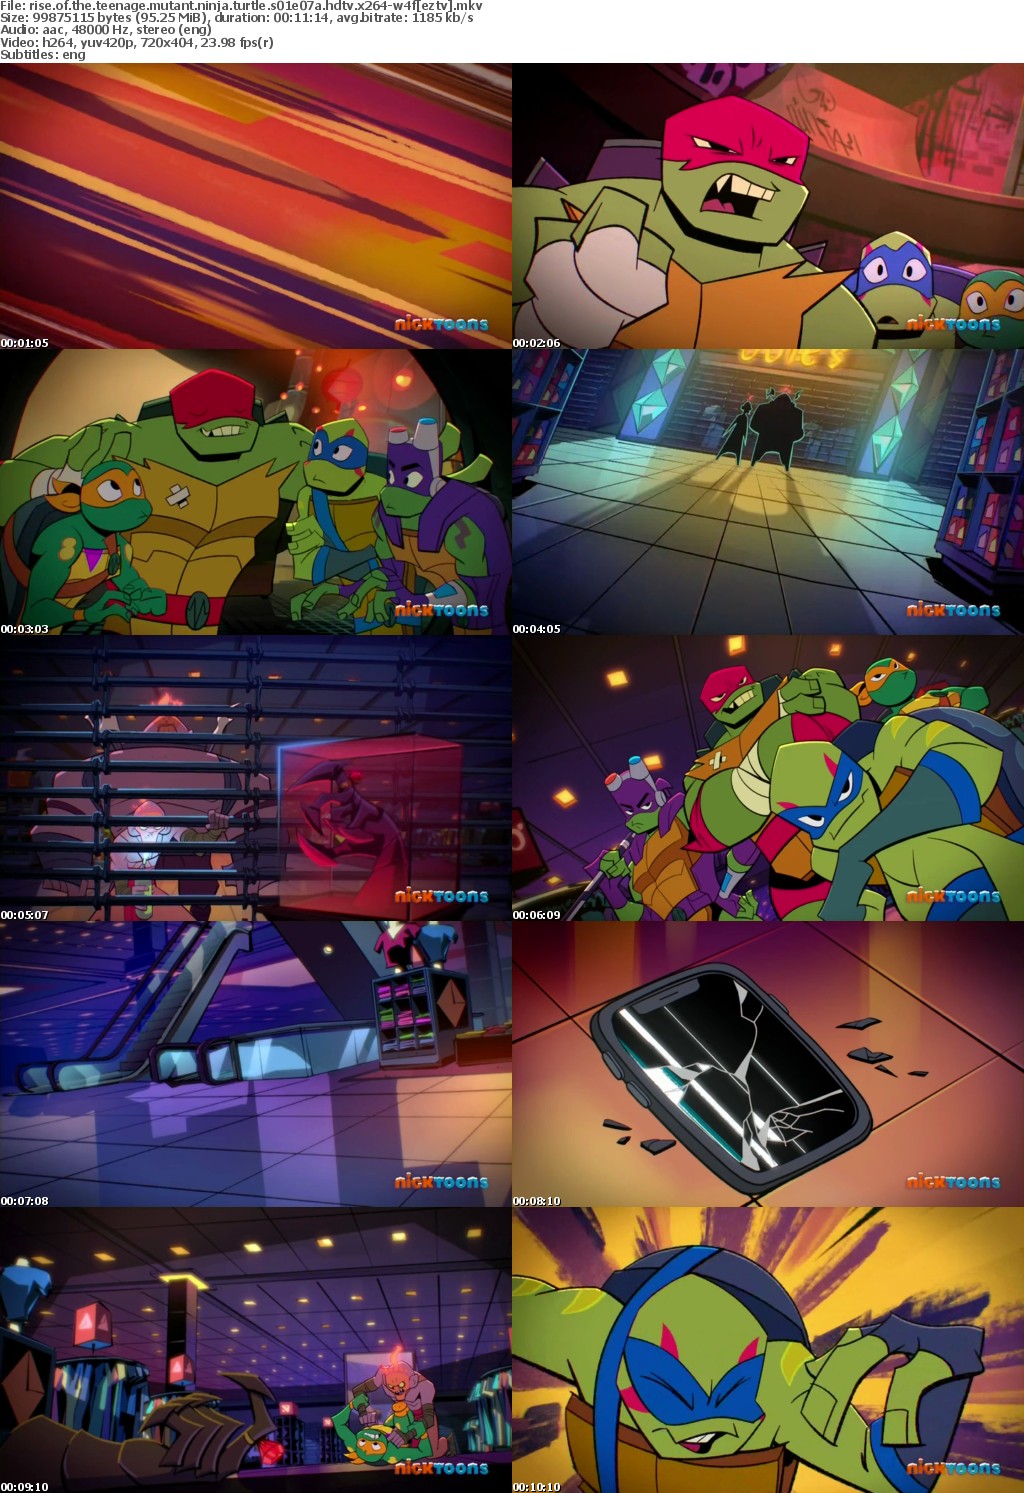 Rise of the Teenage Mutant Ninja Turtle S01E07a HDTV x264-W4F